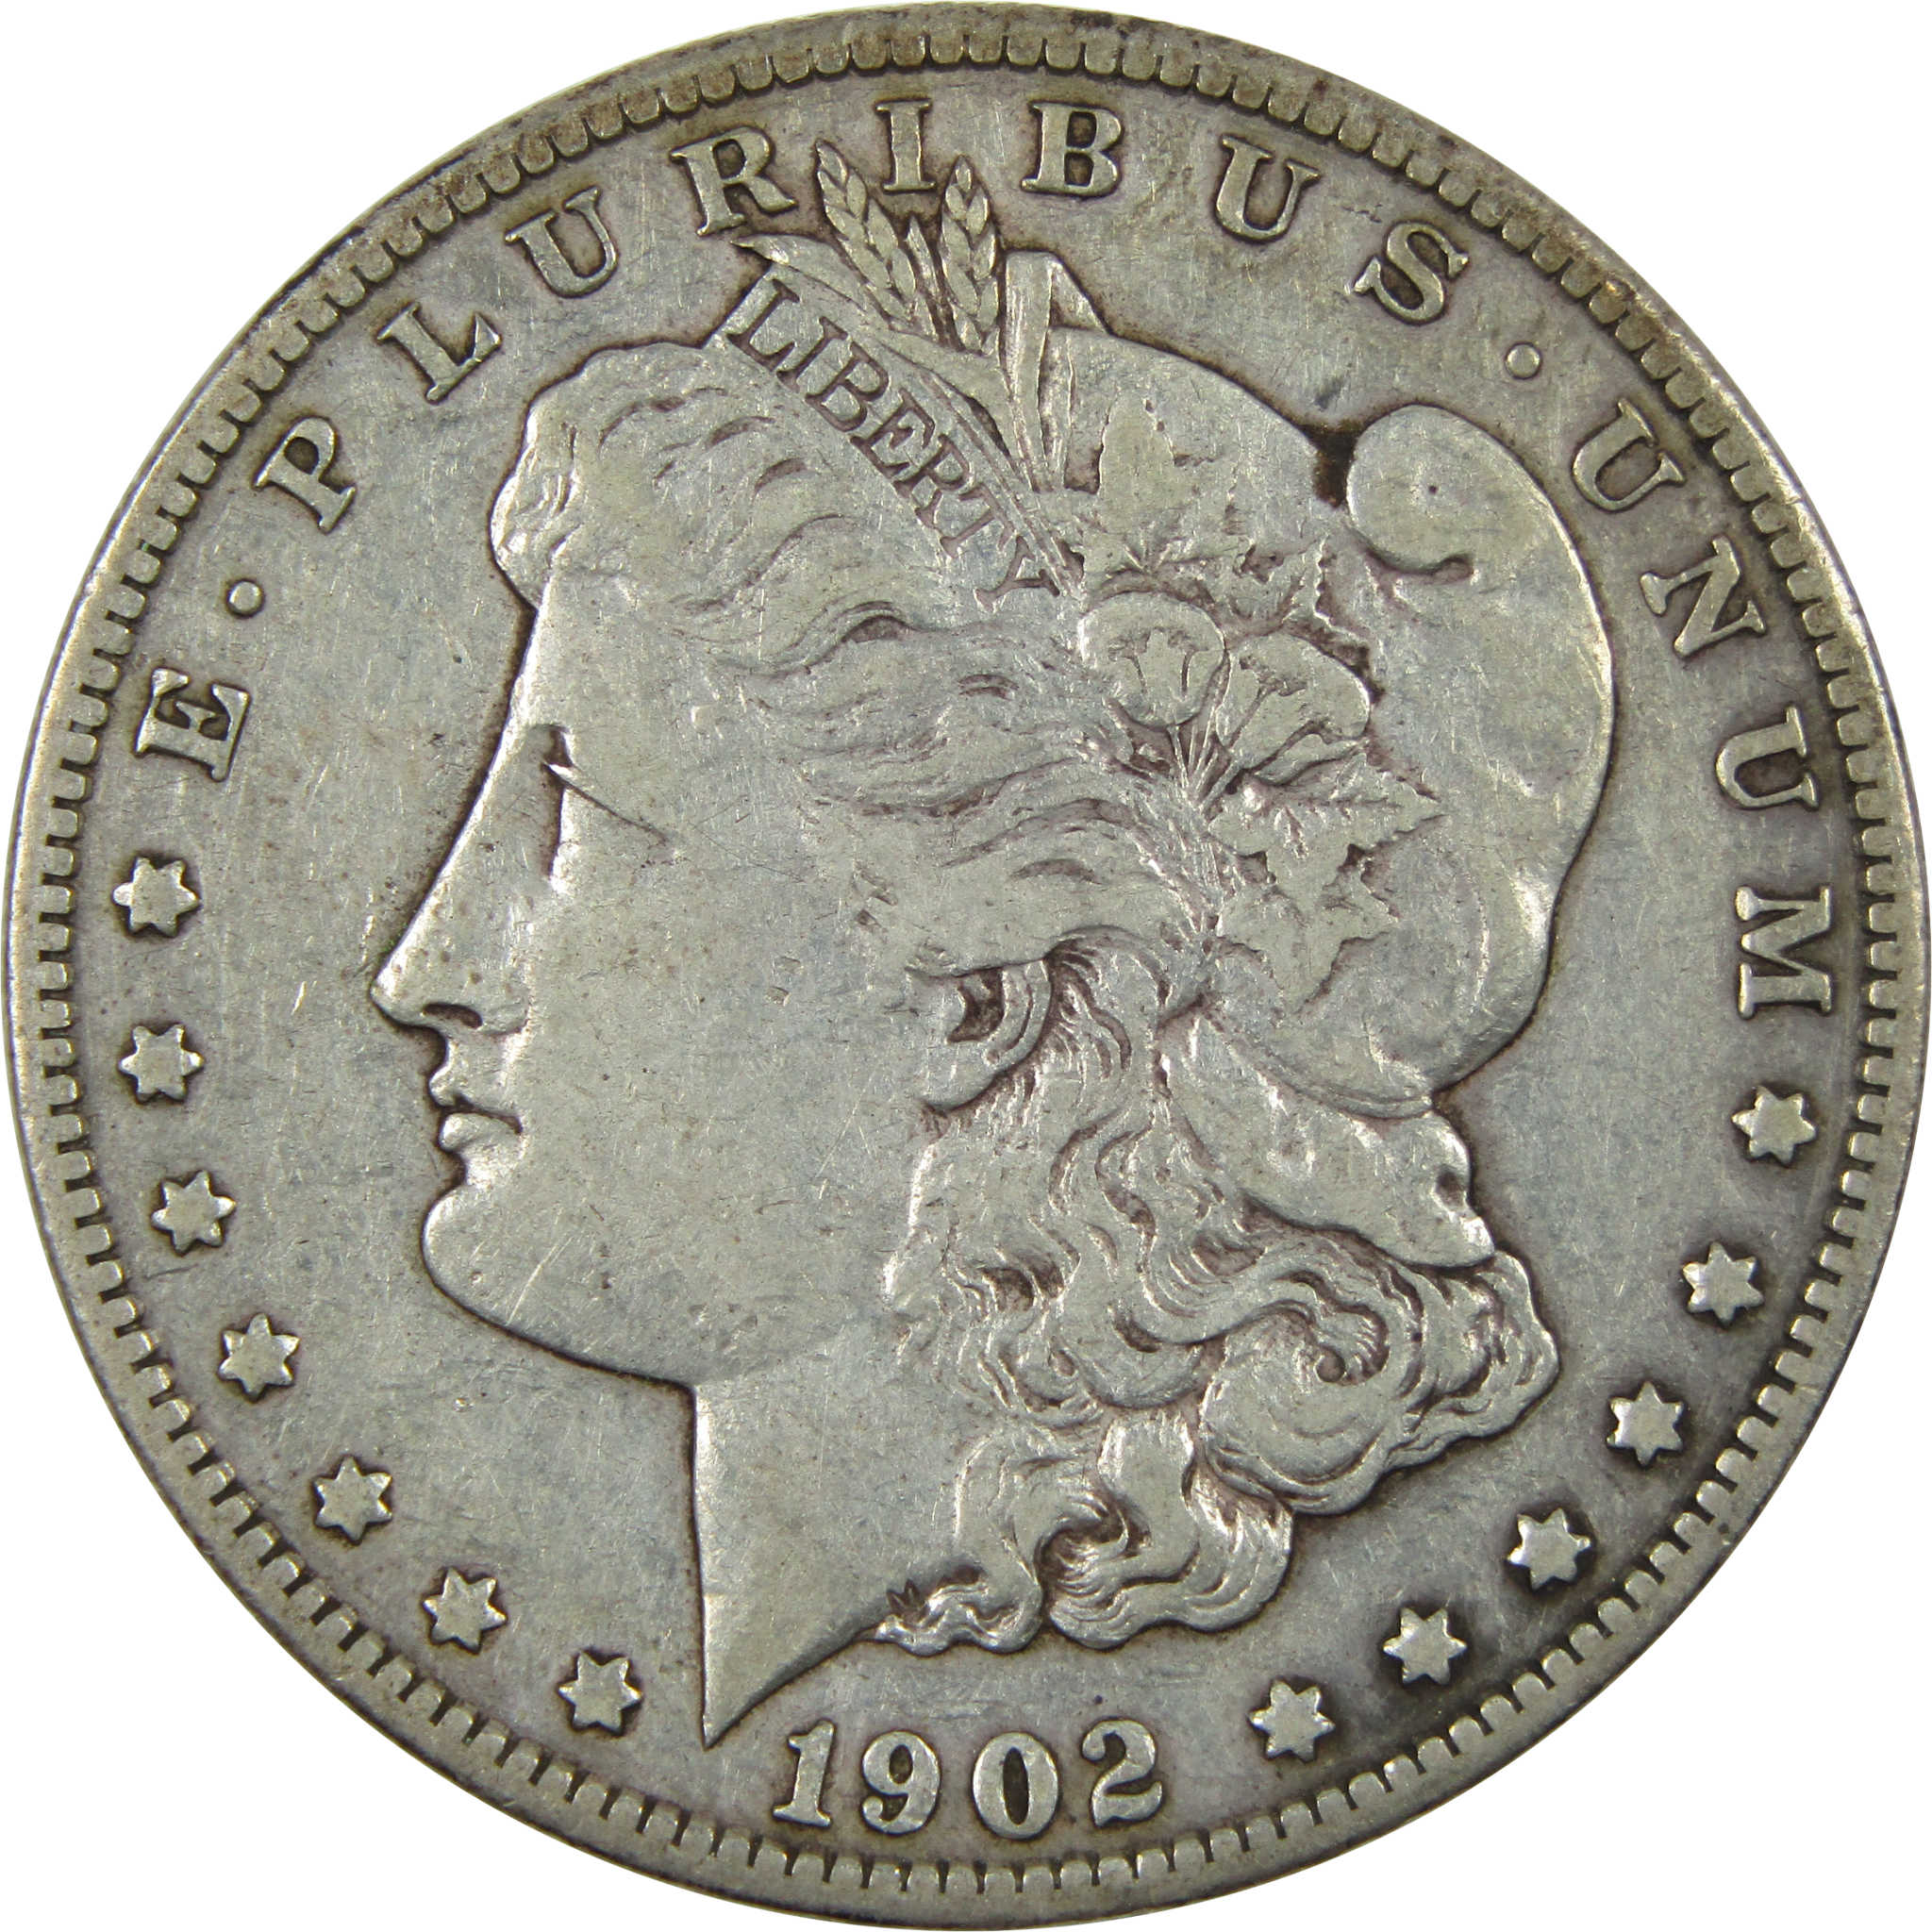 1902 S Morgan Dollar VF Very Fine Silver $1 Coin SKU:I14075 - Morgan coin - Morgan silver dollar - Morgan silver dollar for sale - Profile Coins &amp; Collectibles